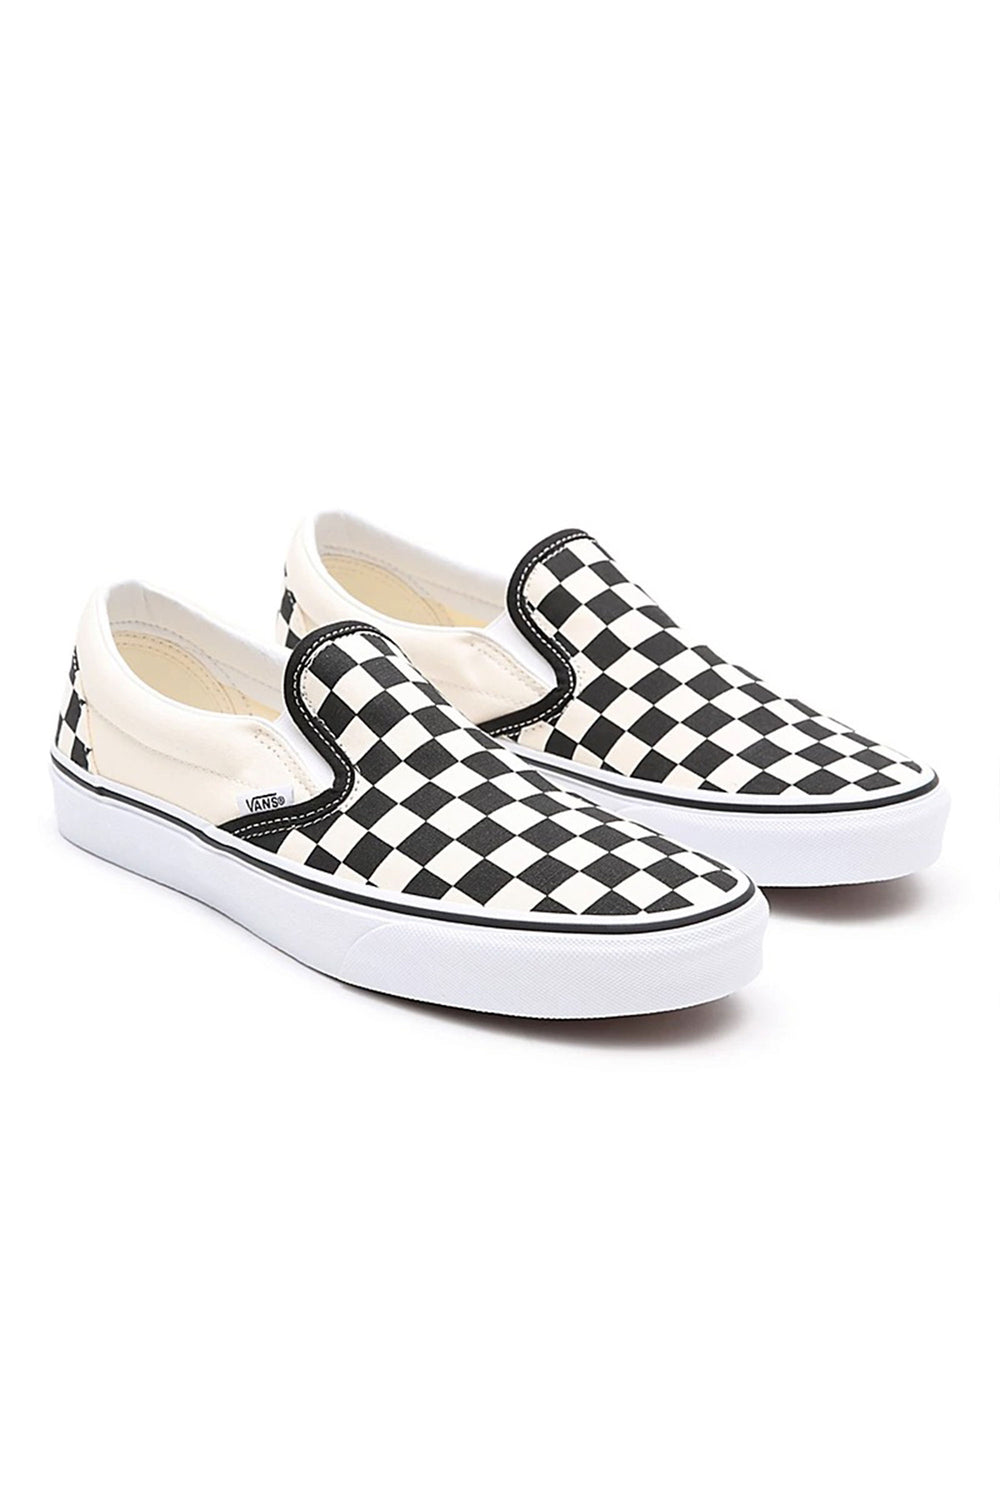 Pukas-Surf-Shop-vans-footwear-Classic-Slip-On-black-white